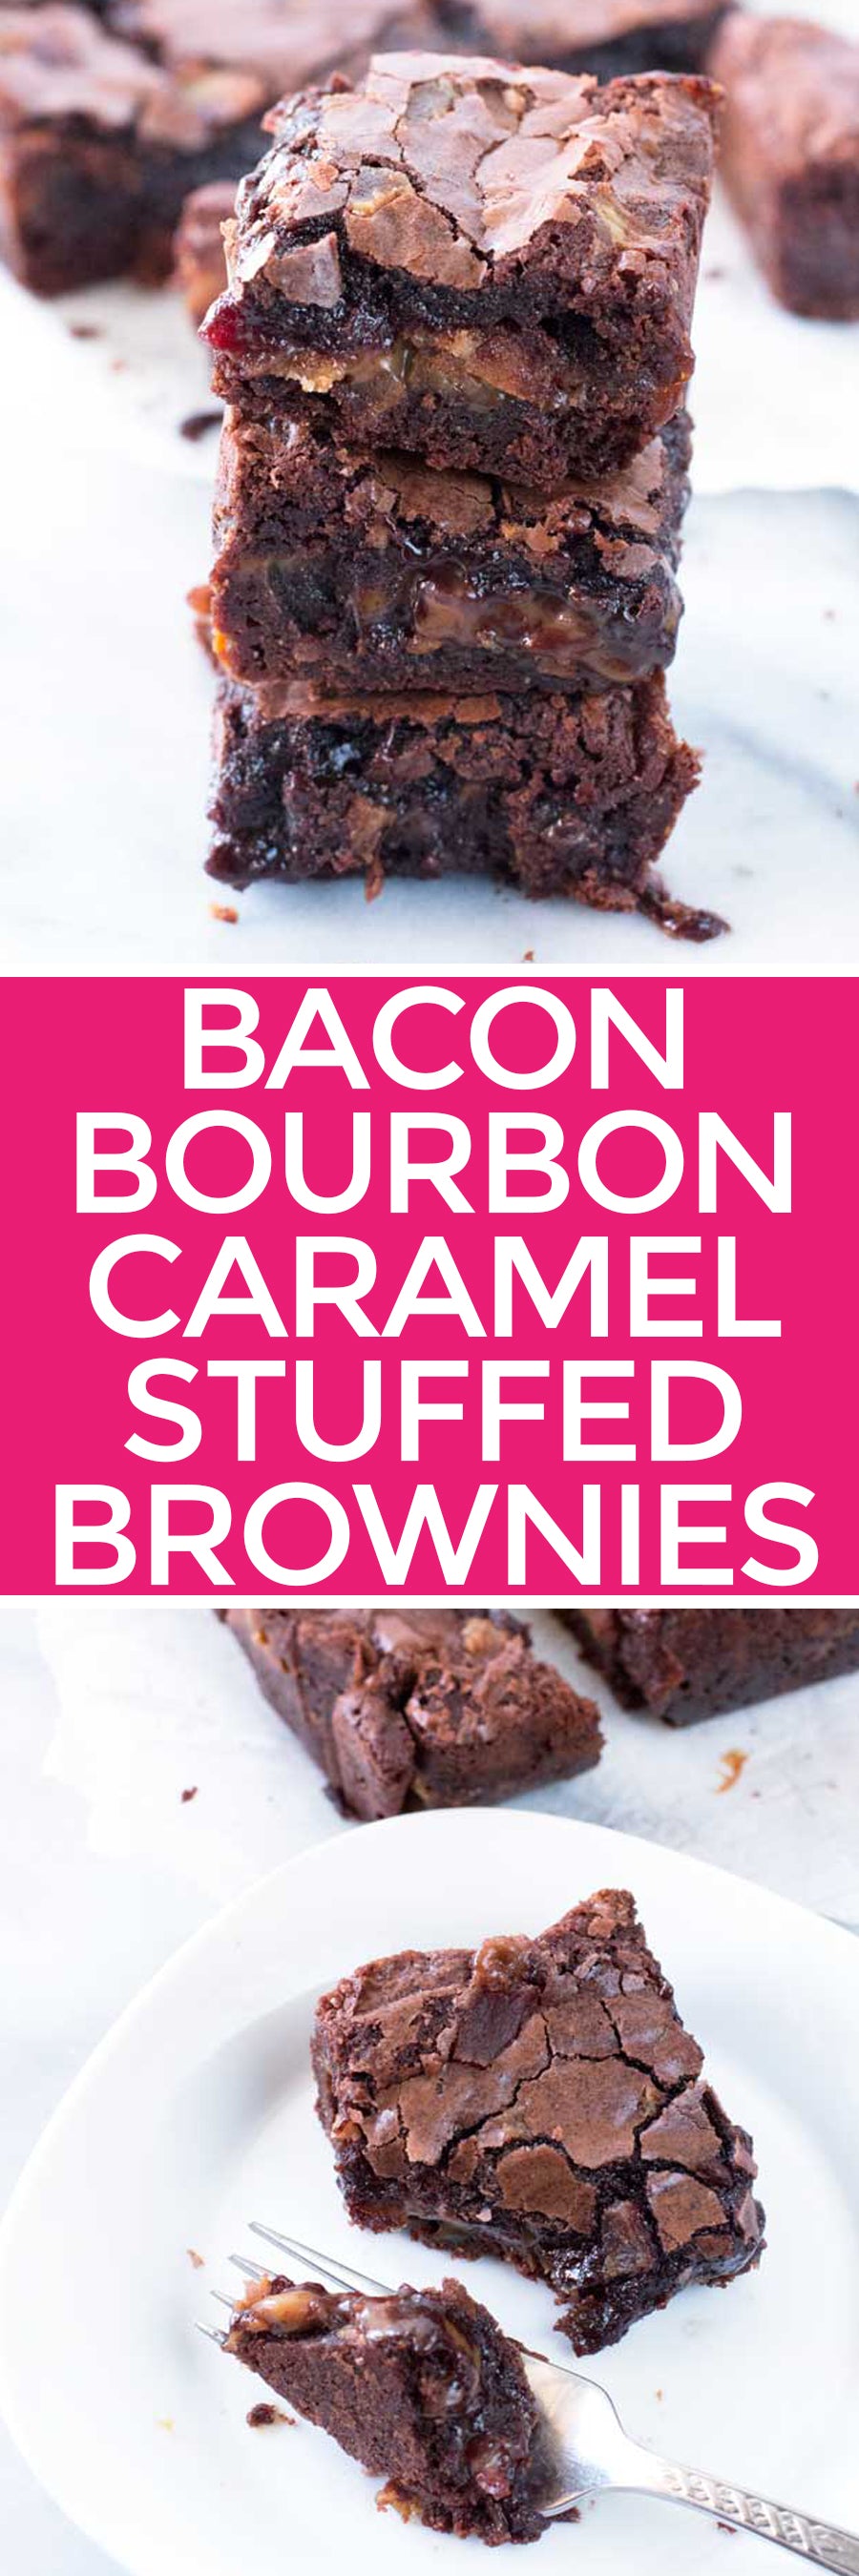 Bacon Bourbon Caramel Stuffed Brownies | pigofthemonth.com #chocolate #dessert